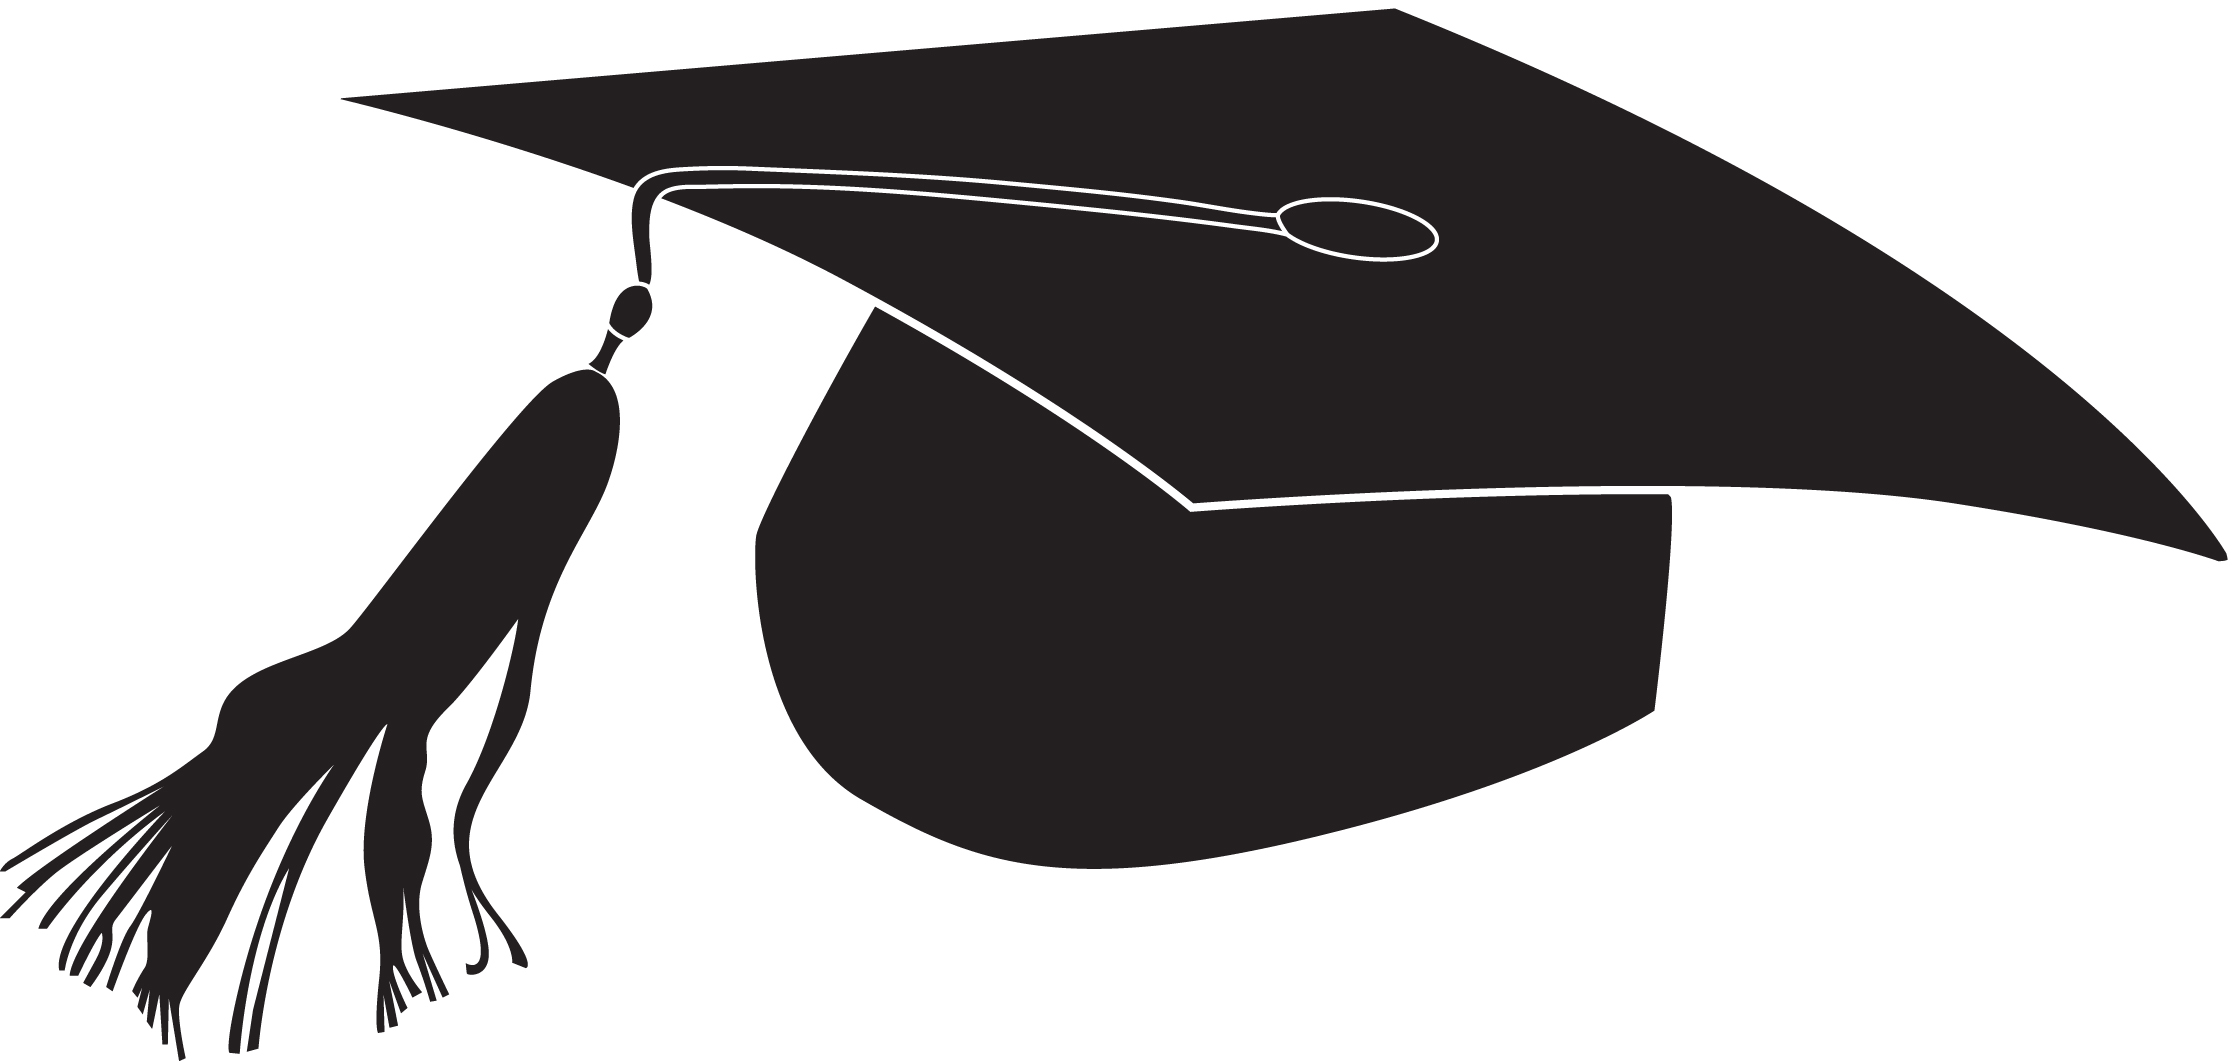 cap-scholarly-graduation-cap.jpg